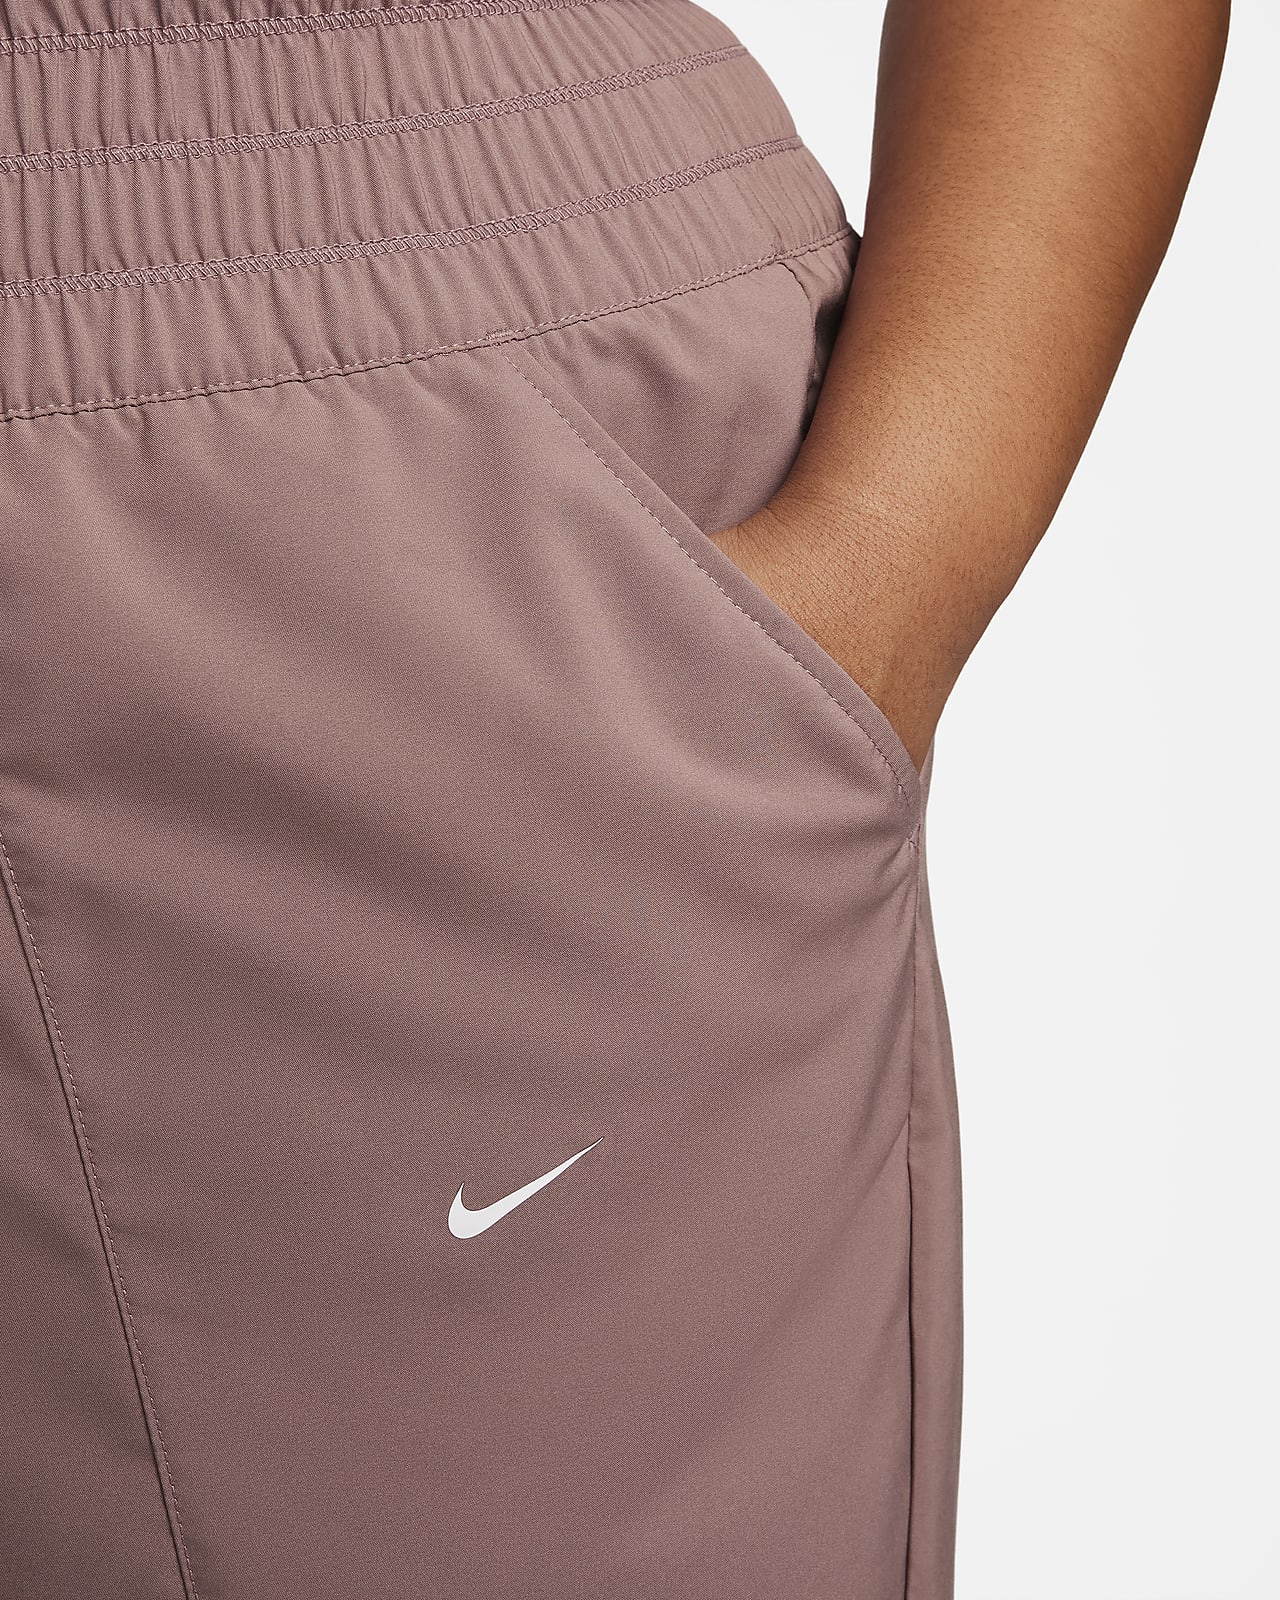 Nike Women's One Dri-FIT OH Pants